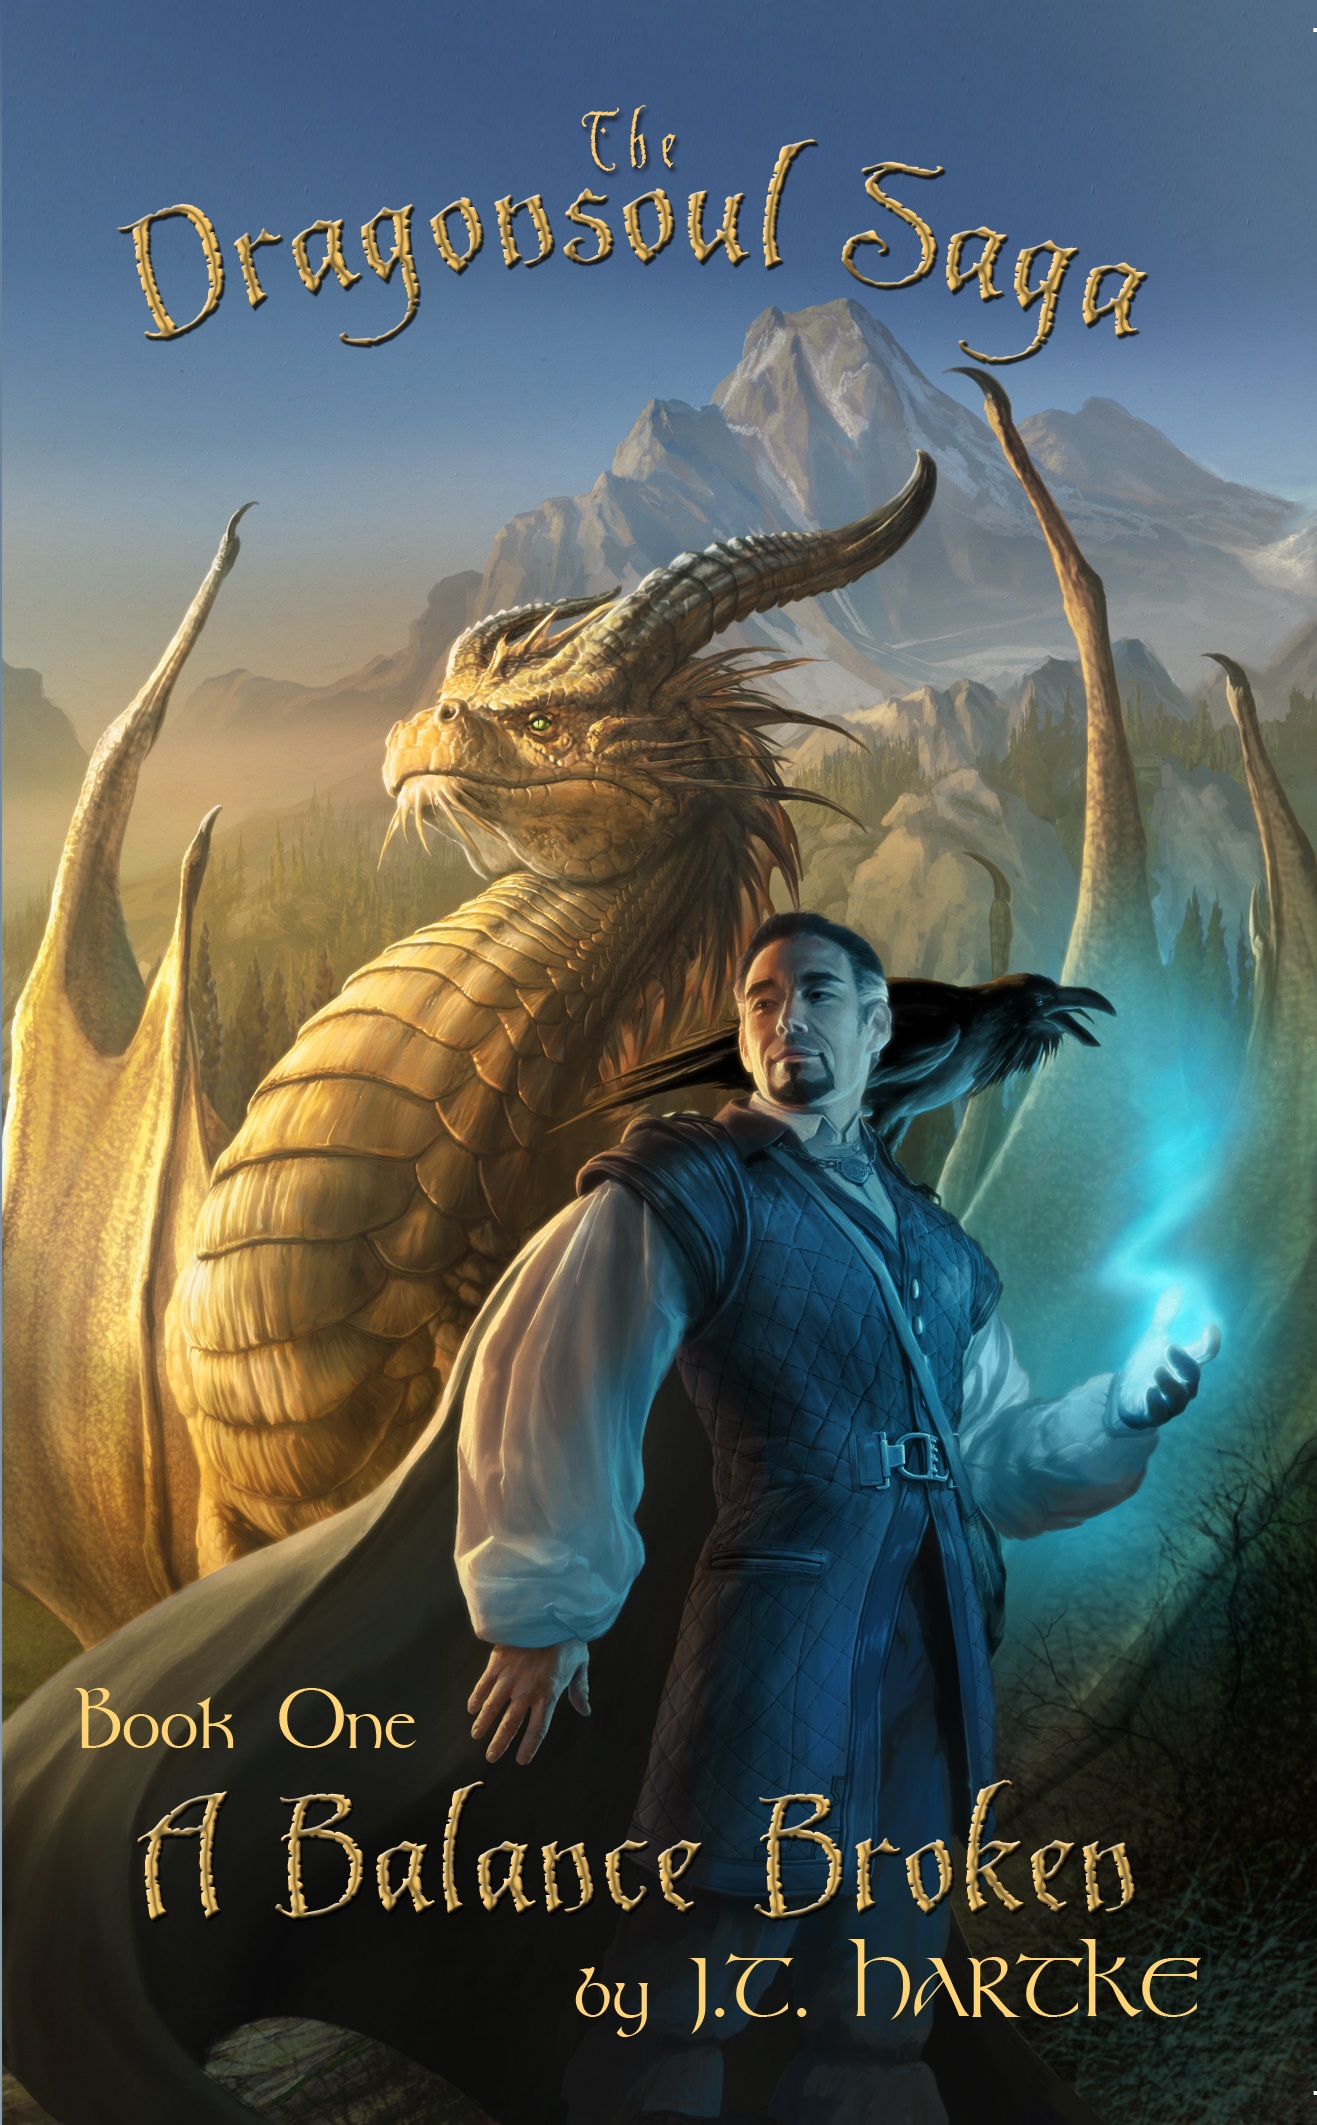 Golden dragon and wizard on cover of J.T. Hartke's fantasy novel A Balance Broken